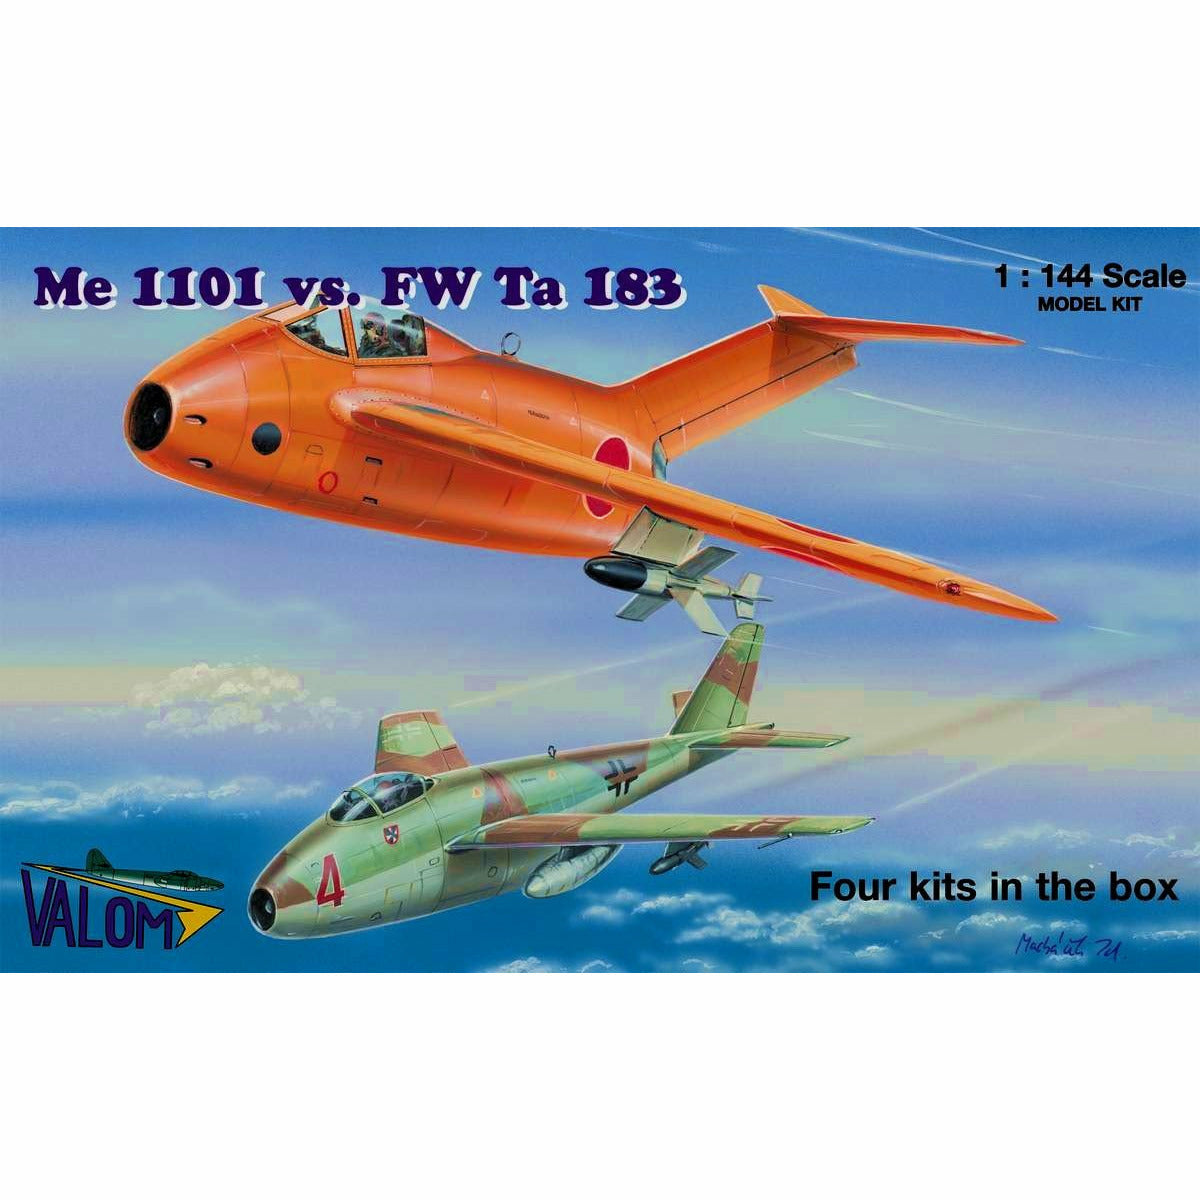 Messerschmitt Me 1101/ Focke-Wulf FW Ta 183 Double kit set 1/144 by Valom